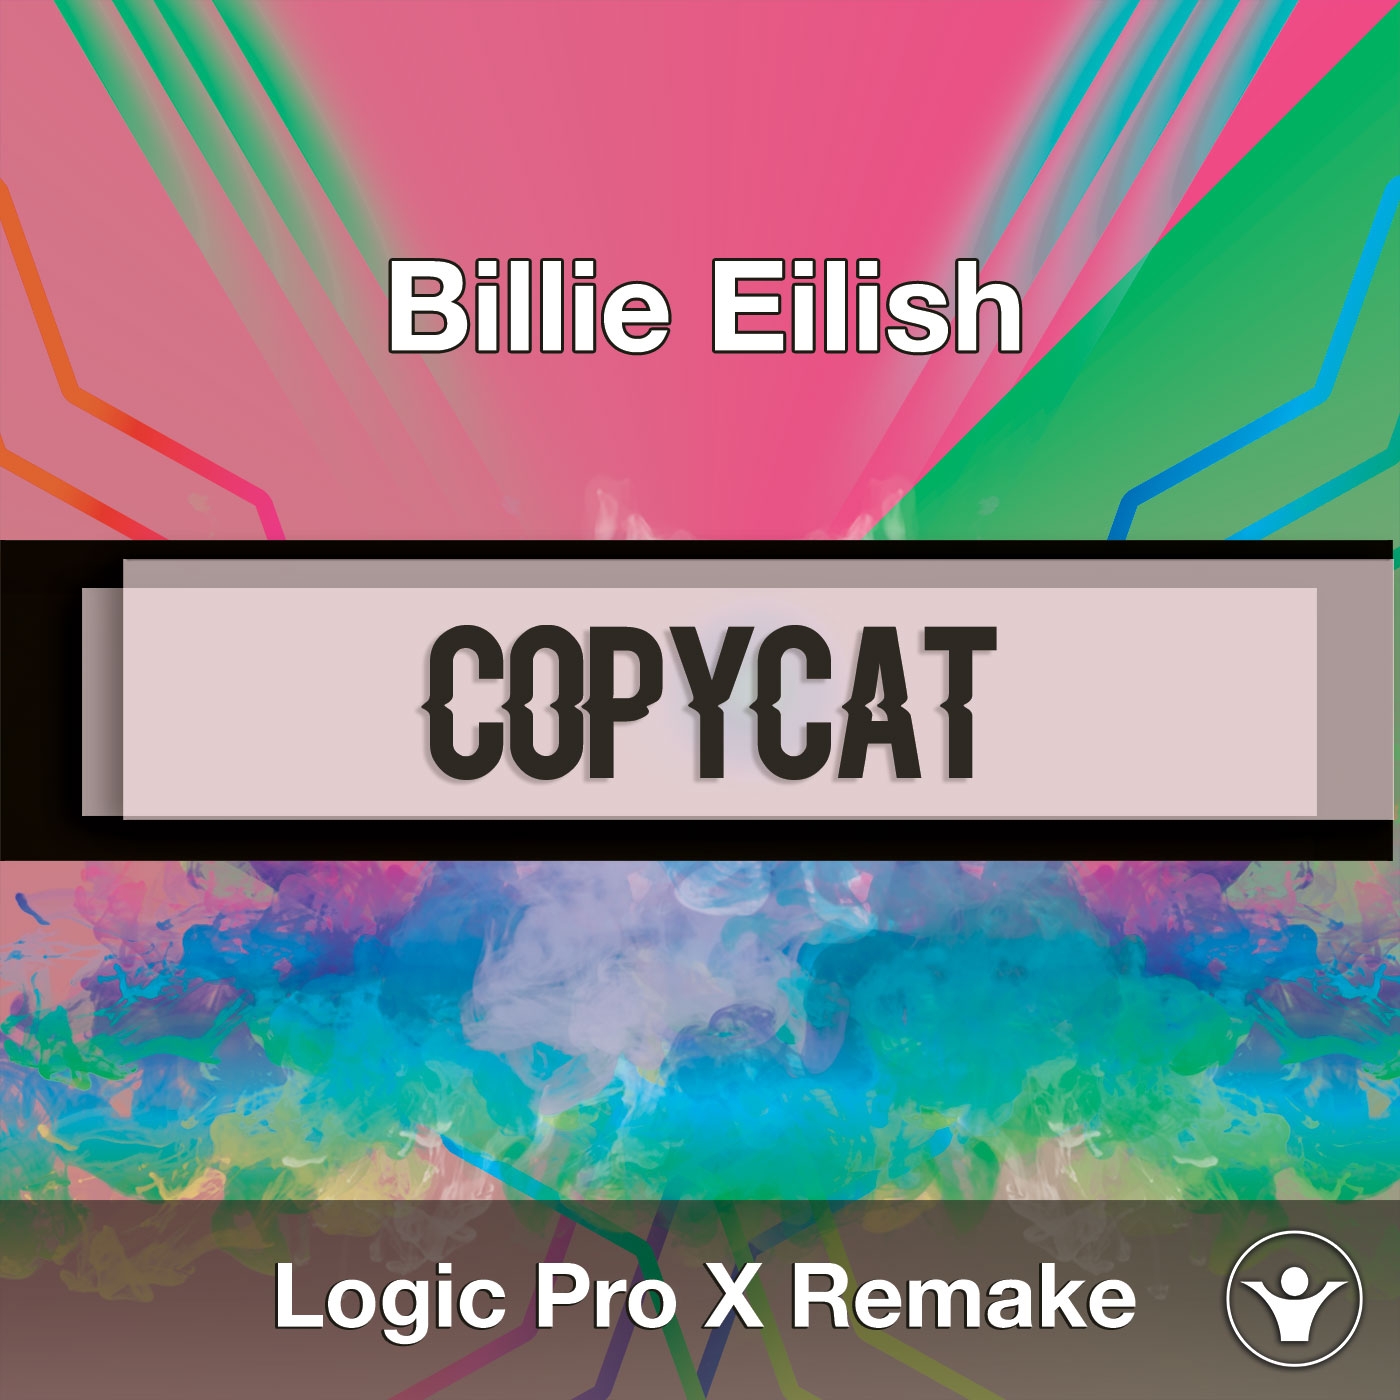 Copycat Billie Eilish Logic Pro X Remake Template